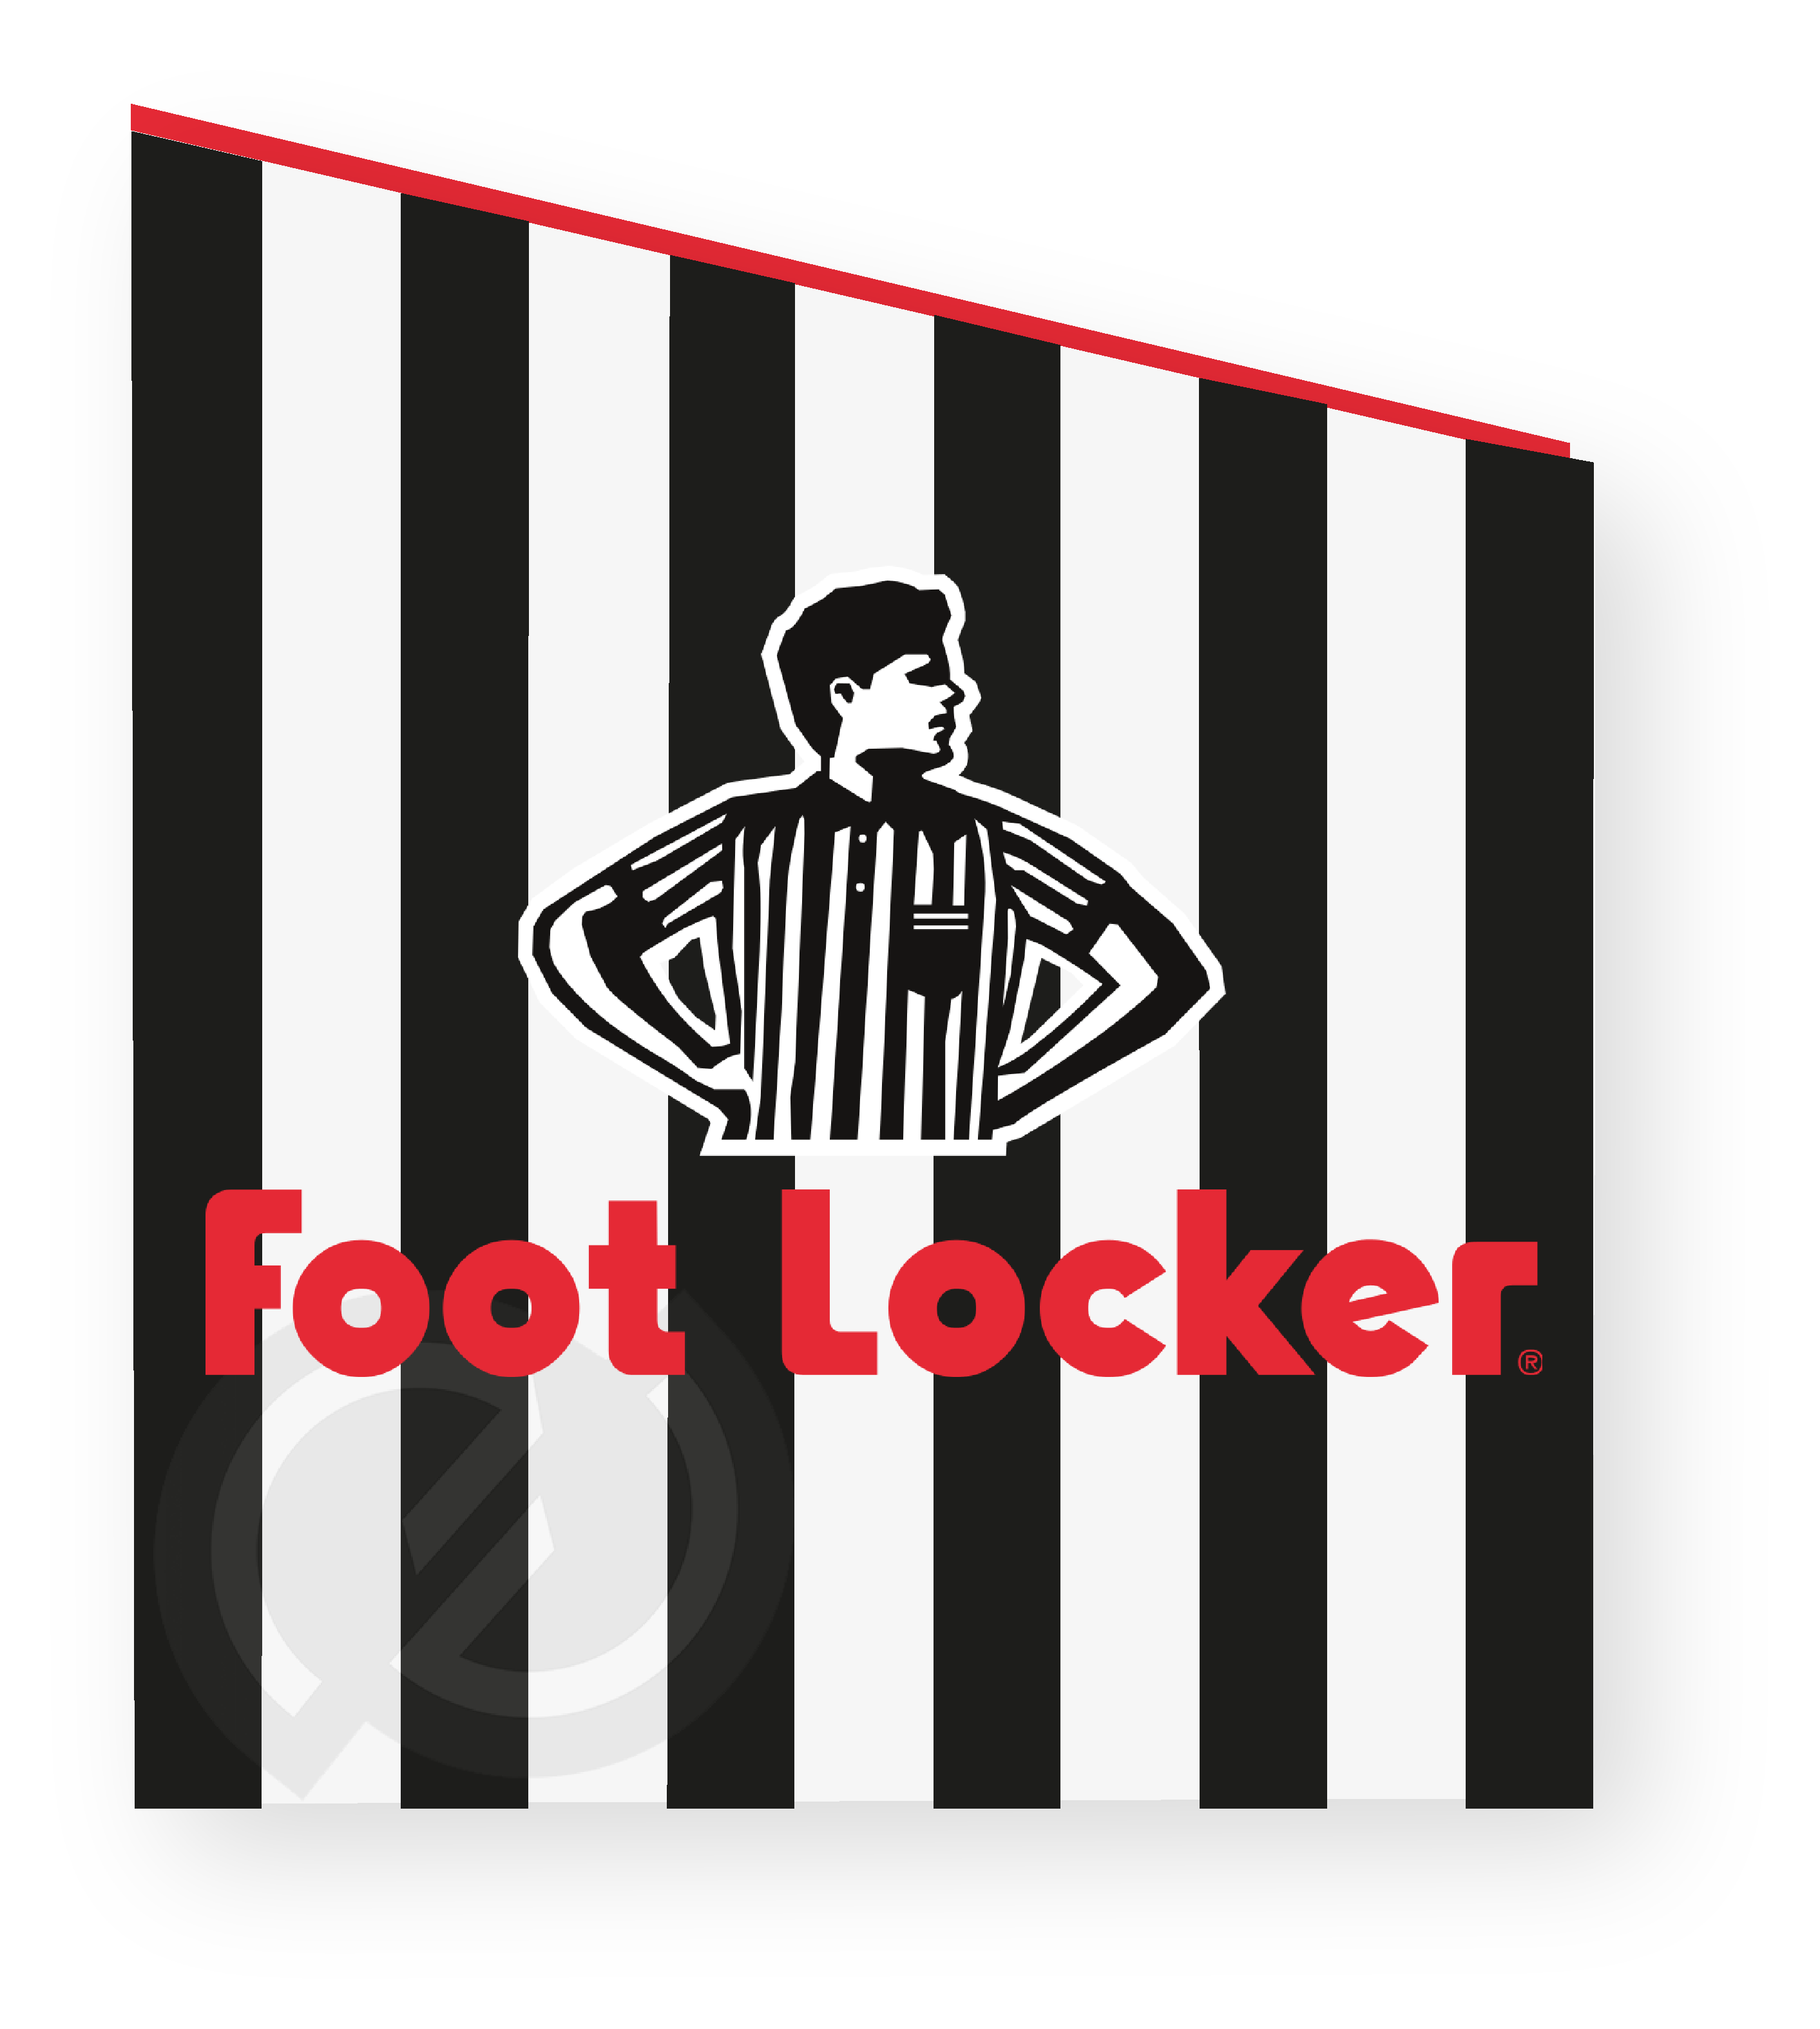 Image logo Footlocker